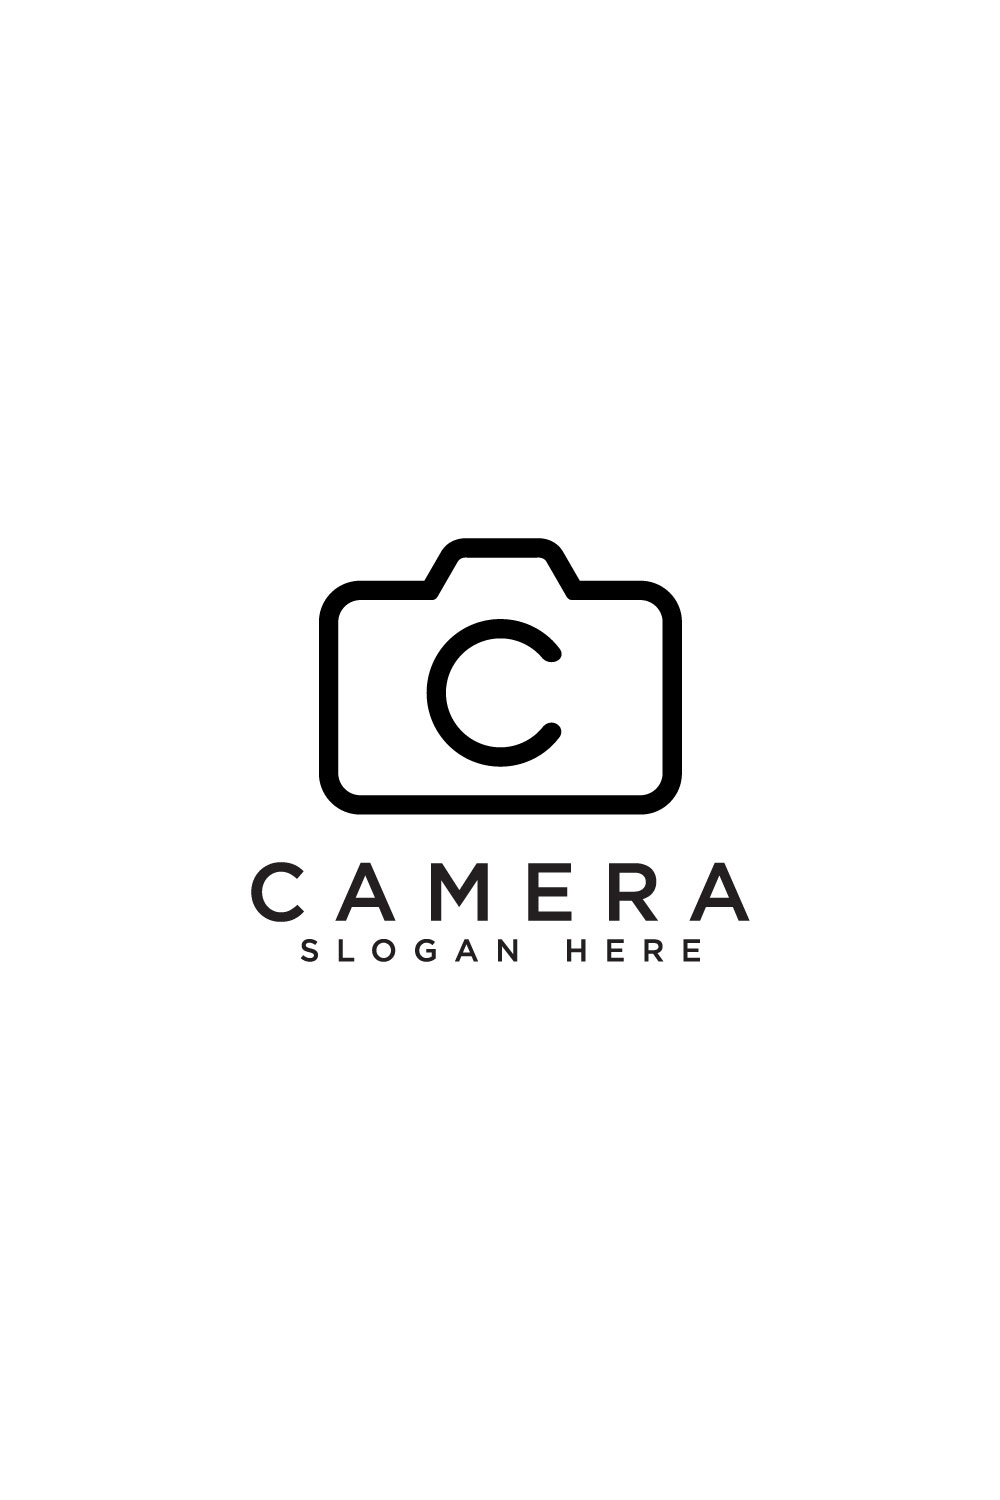 camera logo design pinterest preview image.